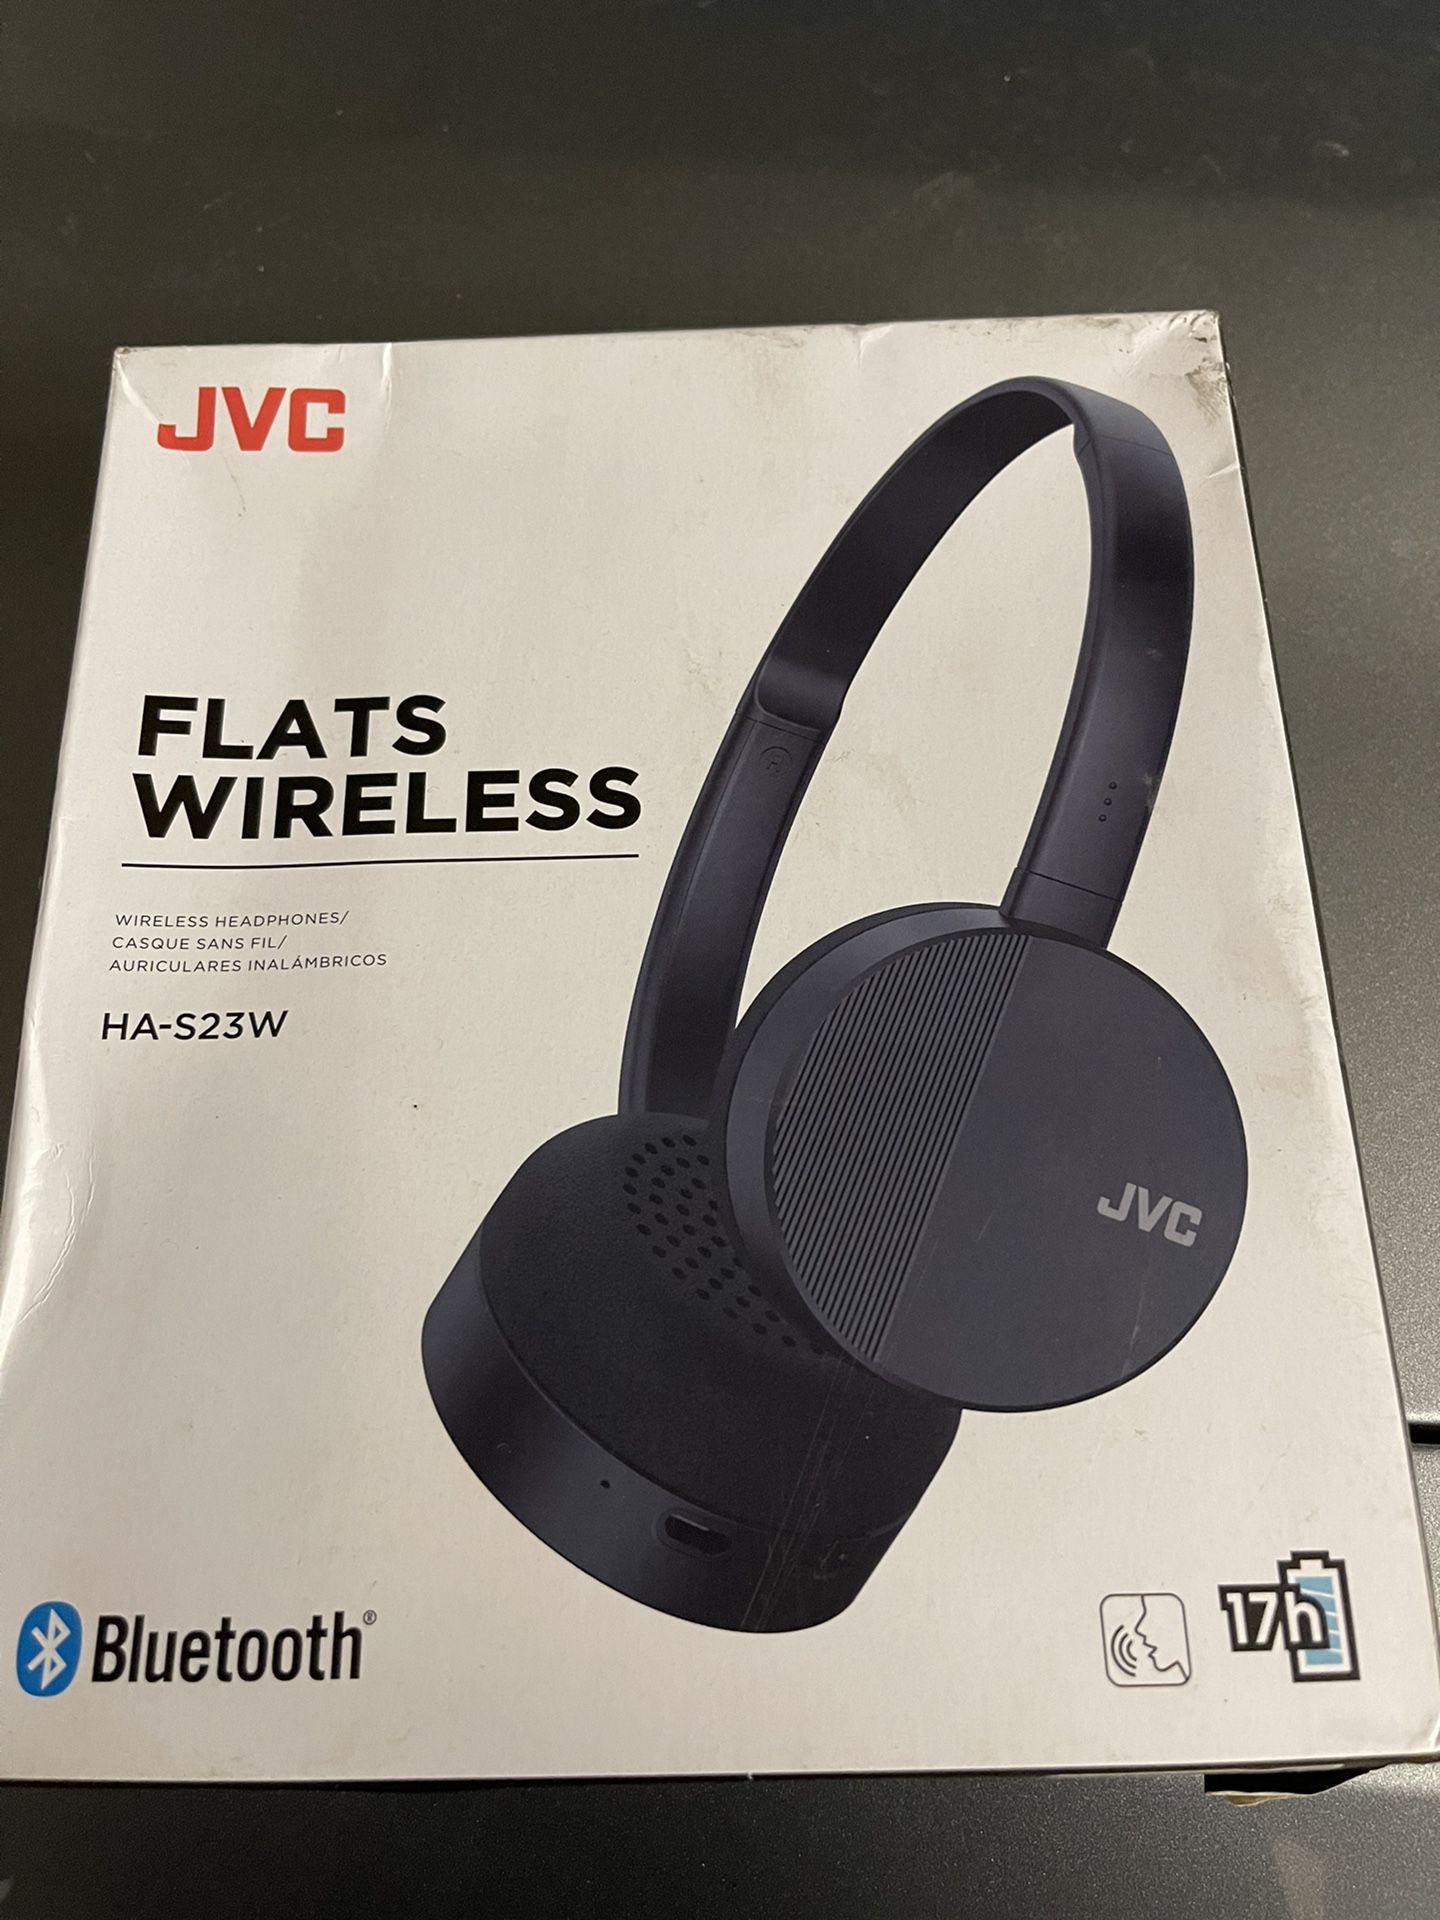 Jvc Flat Wireless Headphones